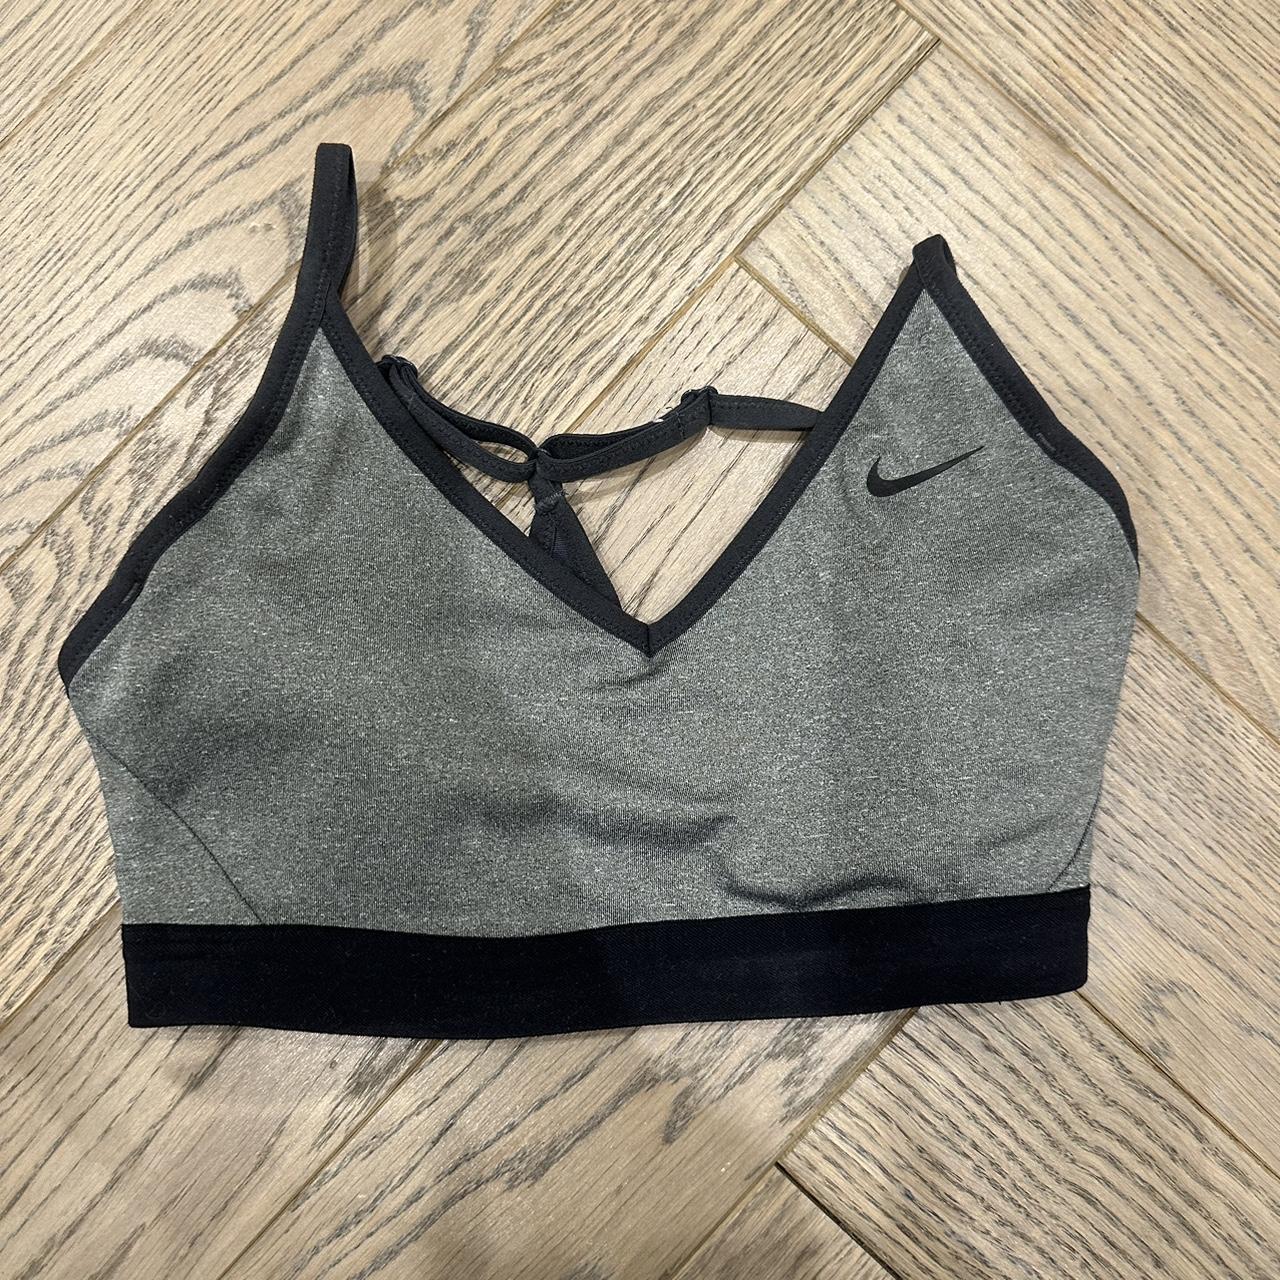 COTTON ON BODY grey and black sports bras 🥊🥊🥊 both - Depop